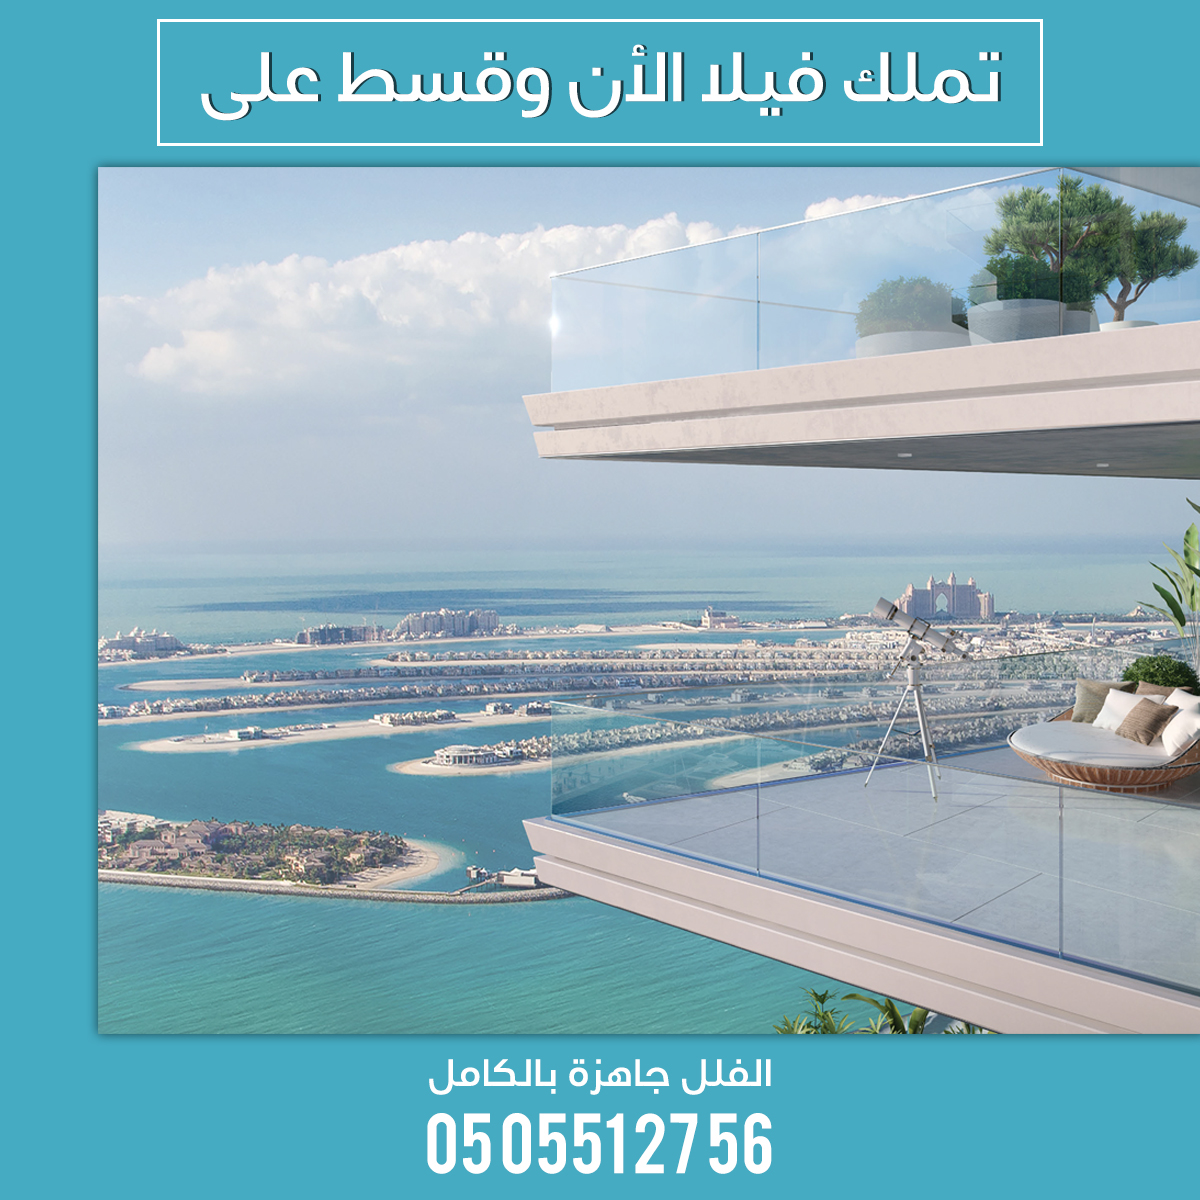 real estate Villa resident property resident property dubai UAE United Arab Emirates graphics socail media